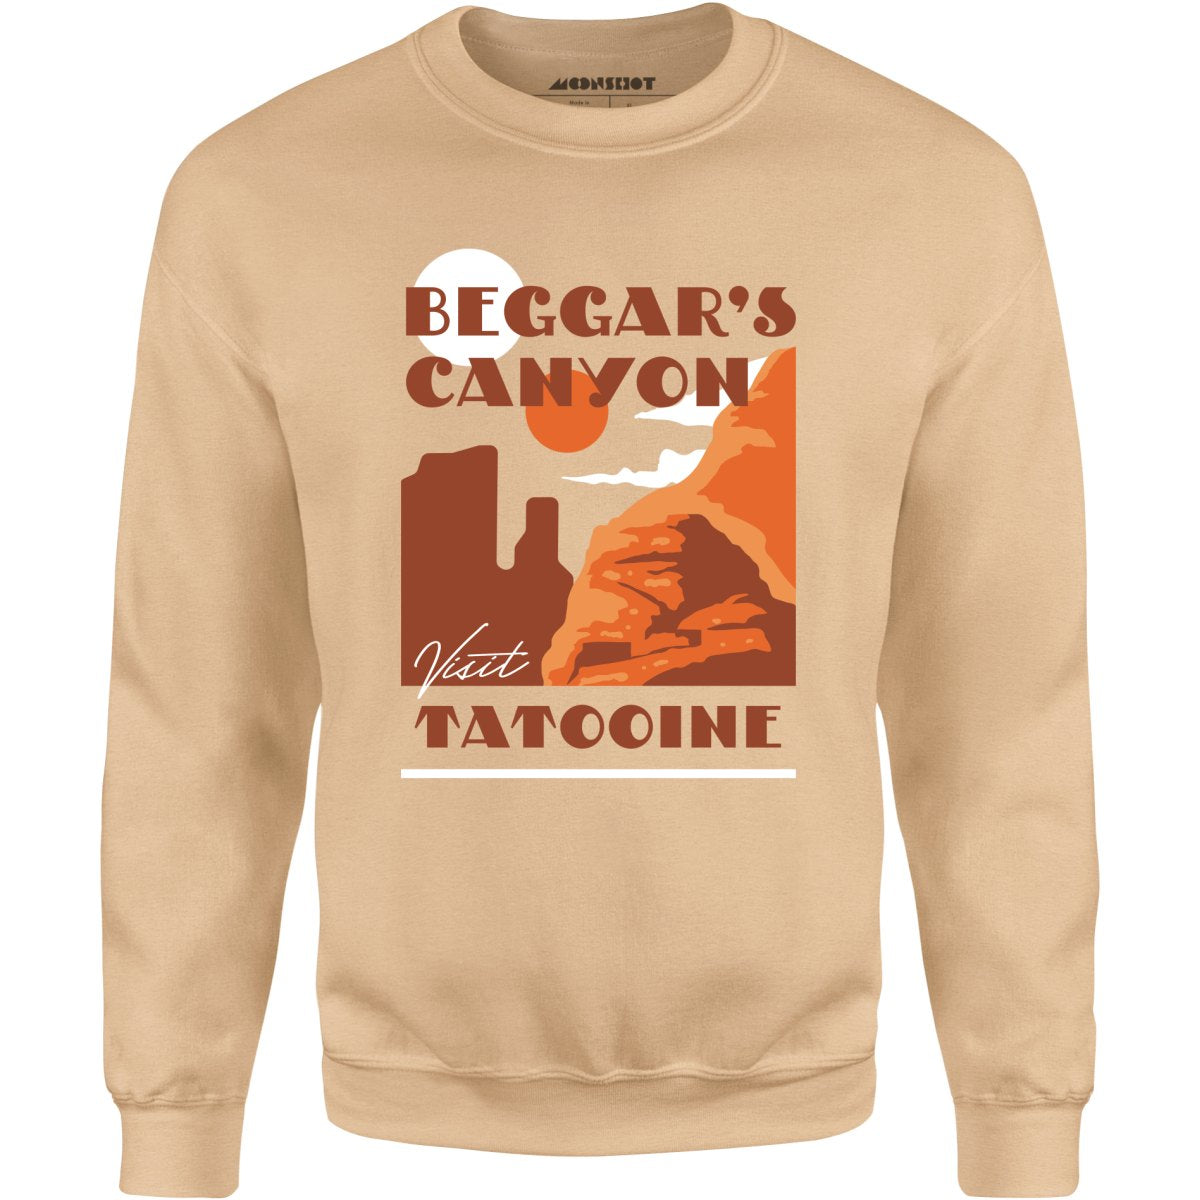 Beggar's Canyon Tatooine - Unisex Sweatshirt